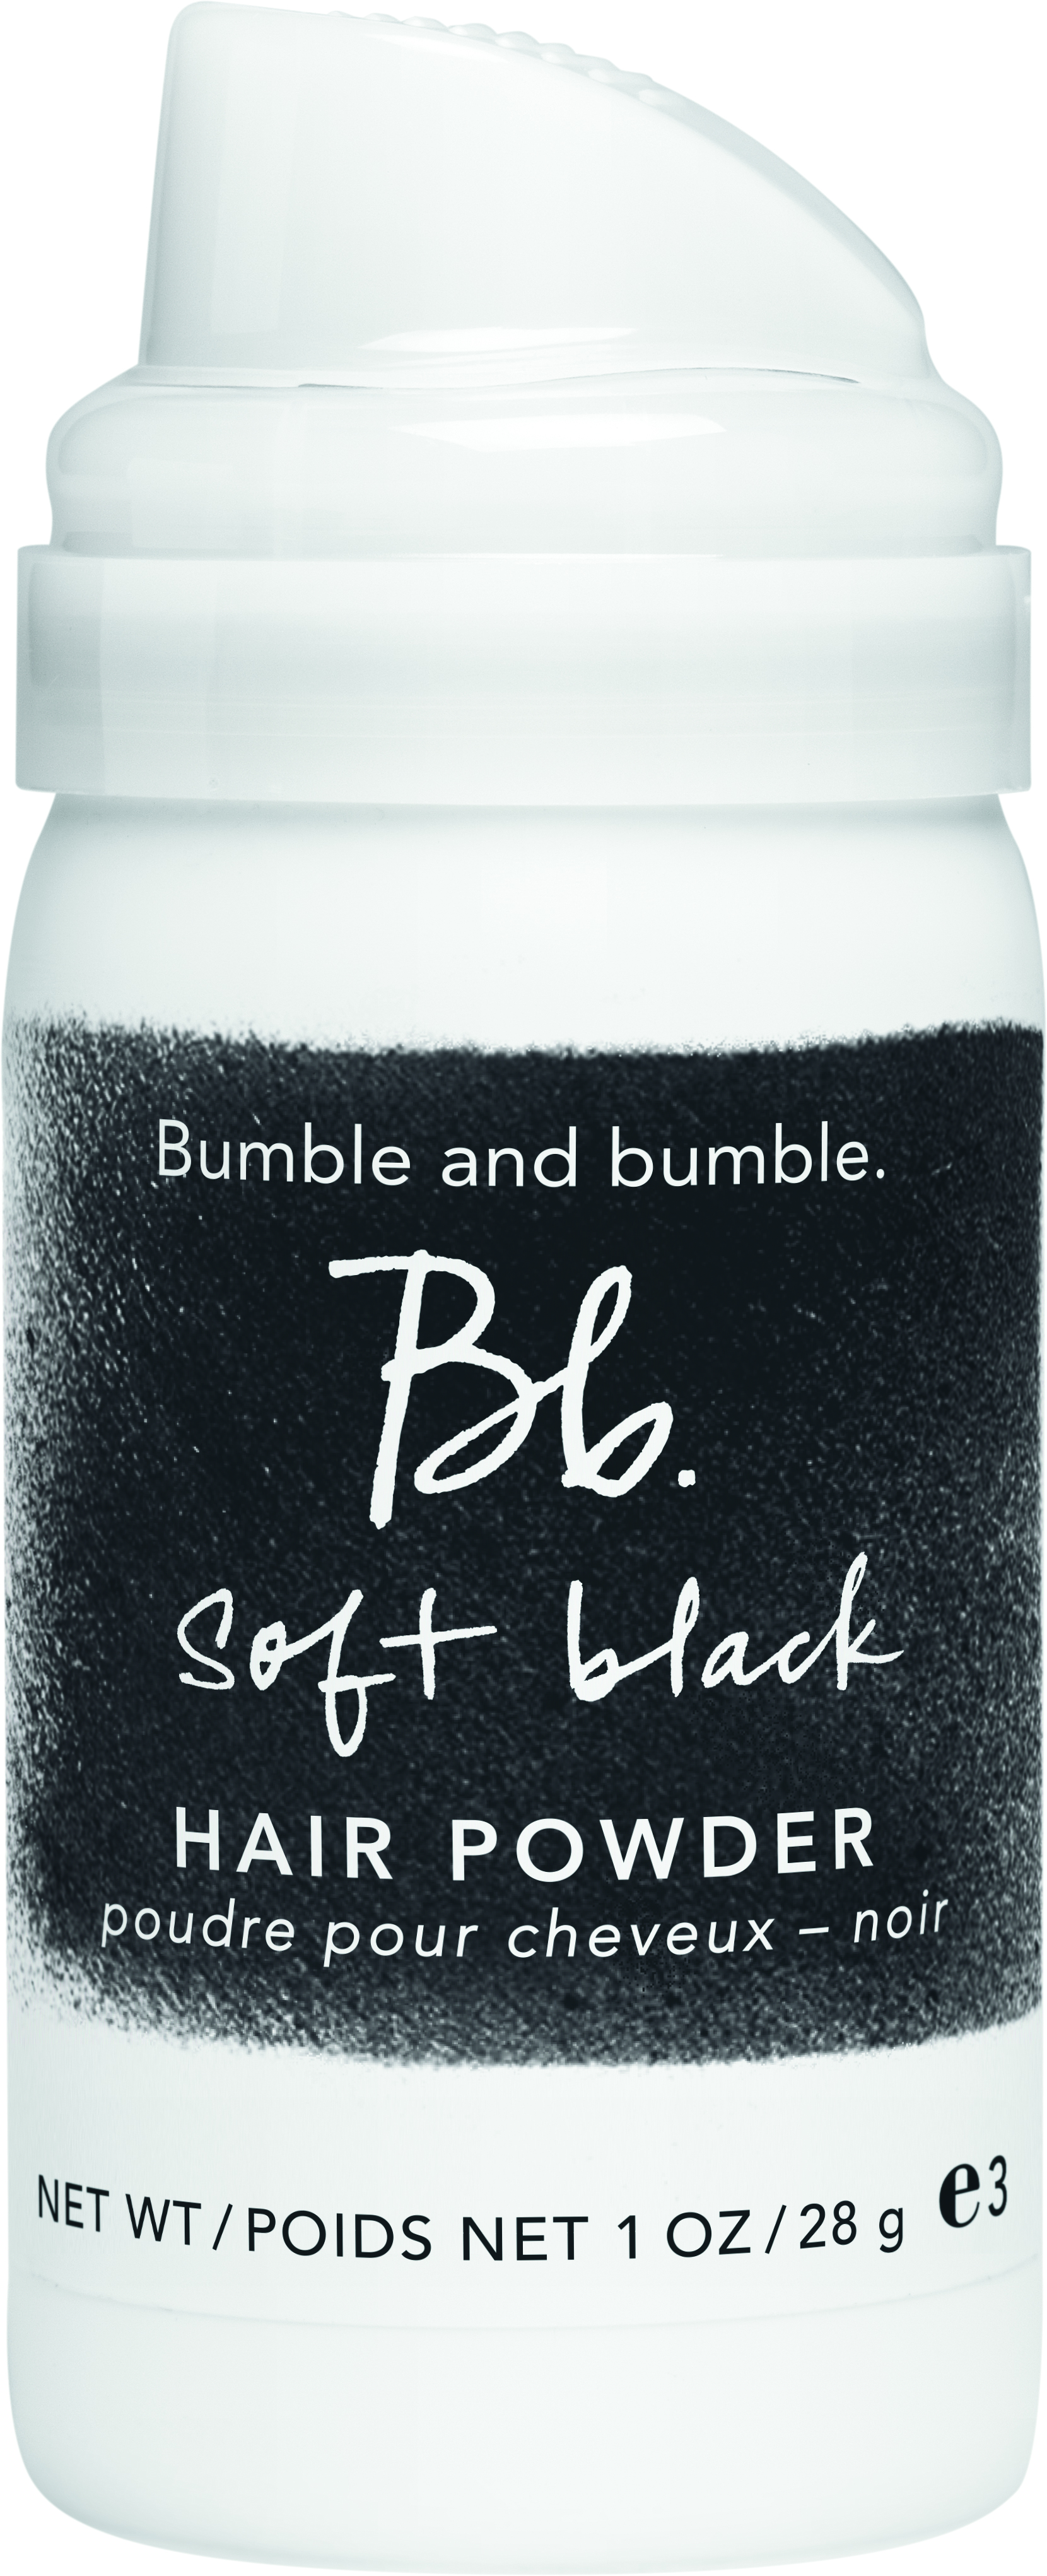 Bumble and bumble Soft Black Hair Powder 28g